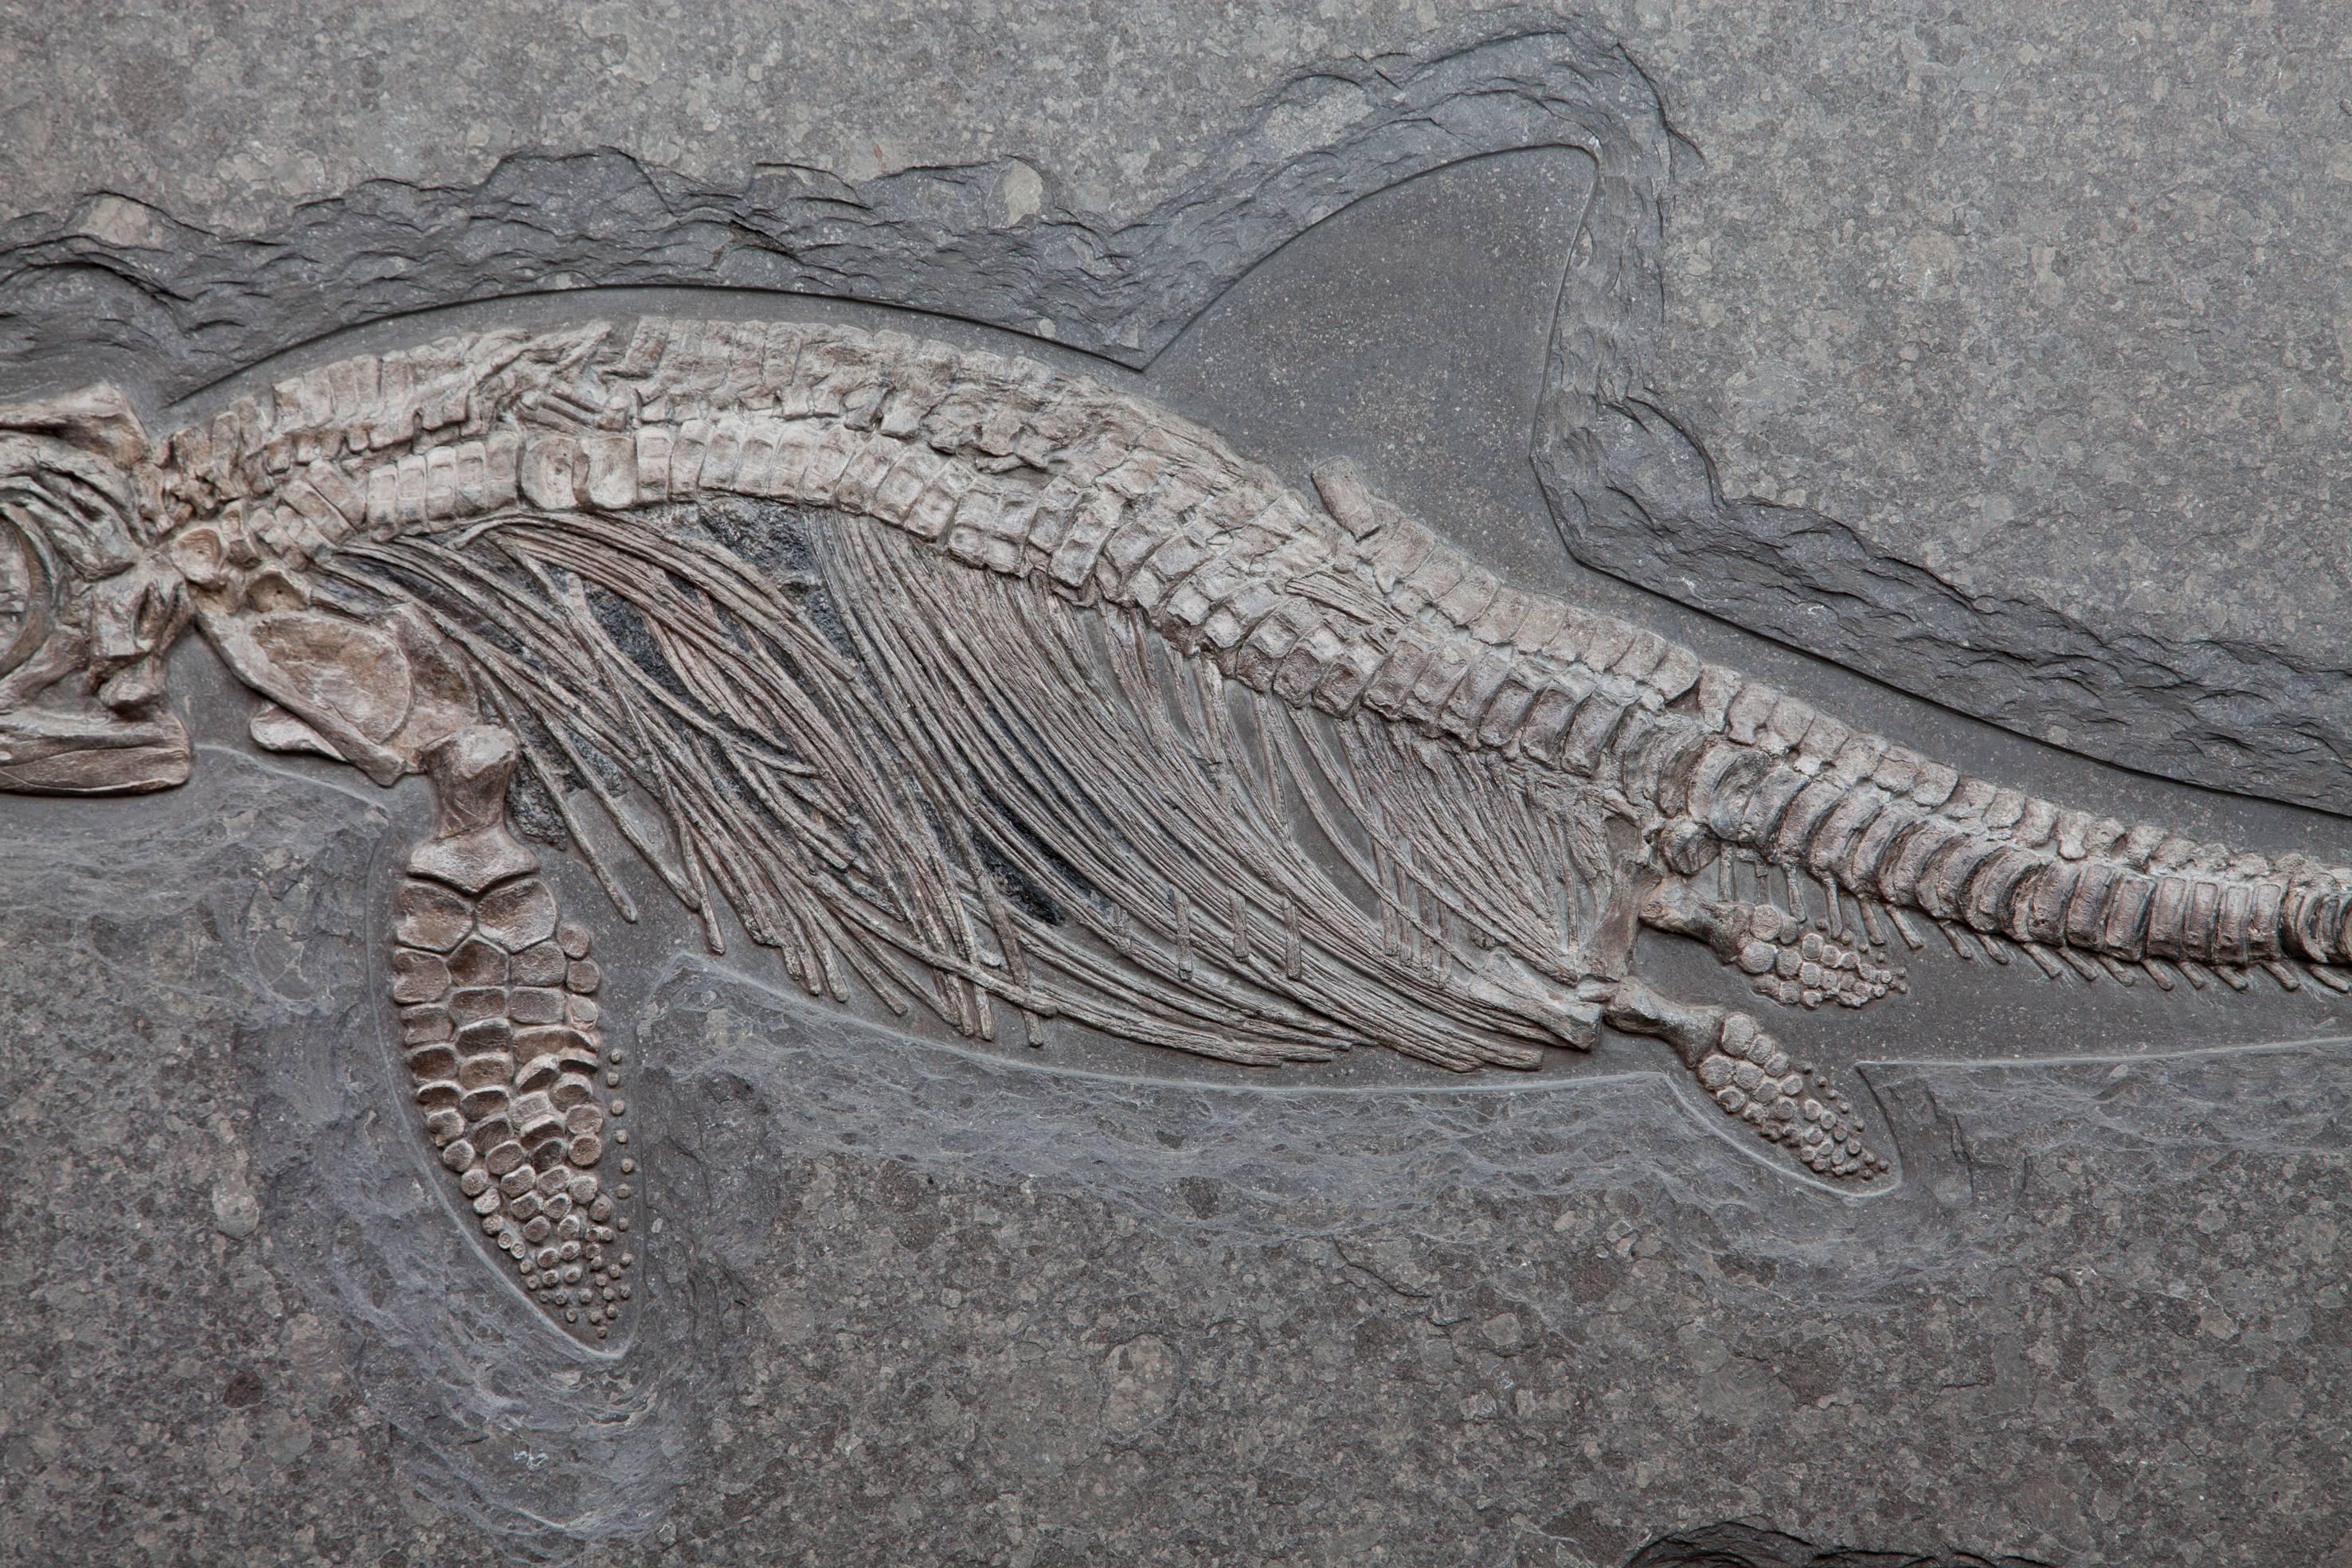 ichthyosaur fossil for sale